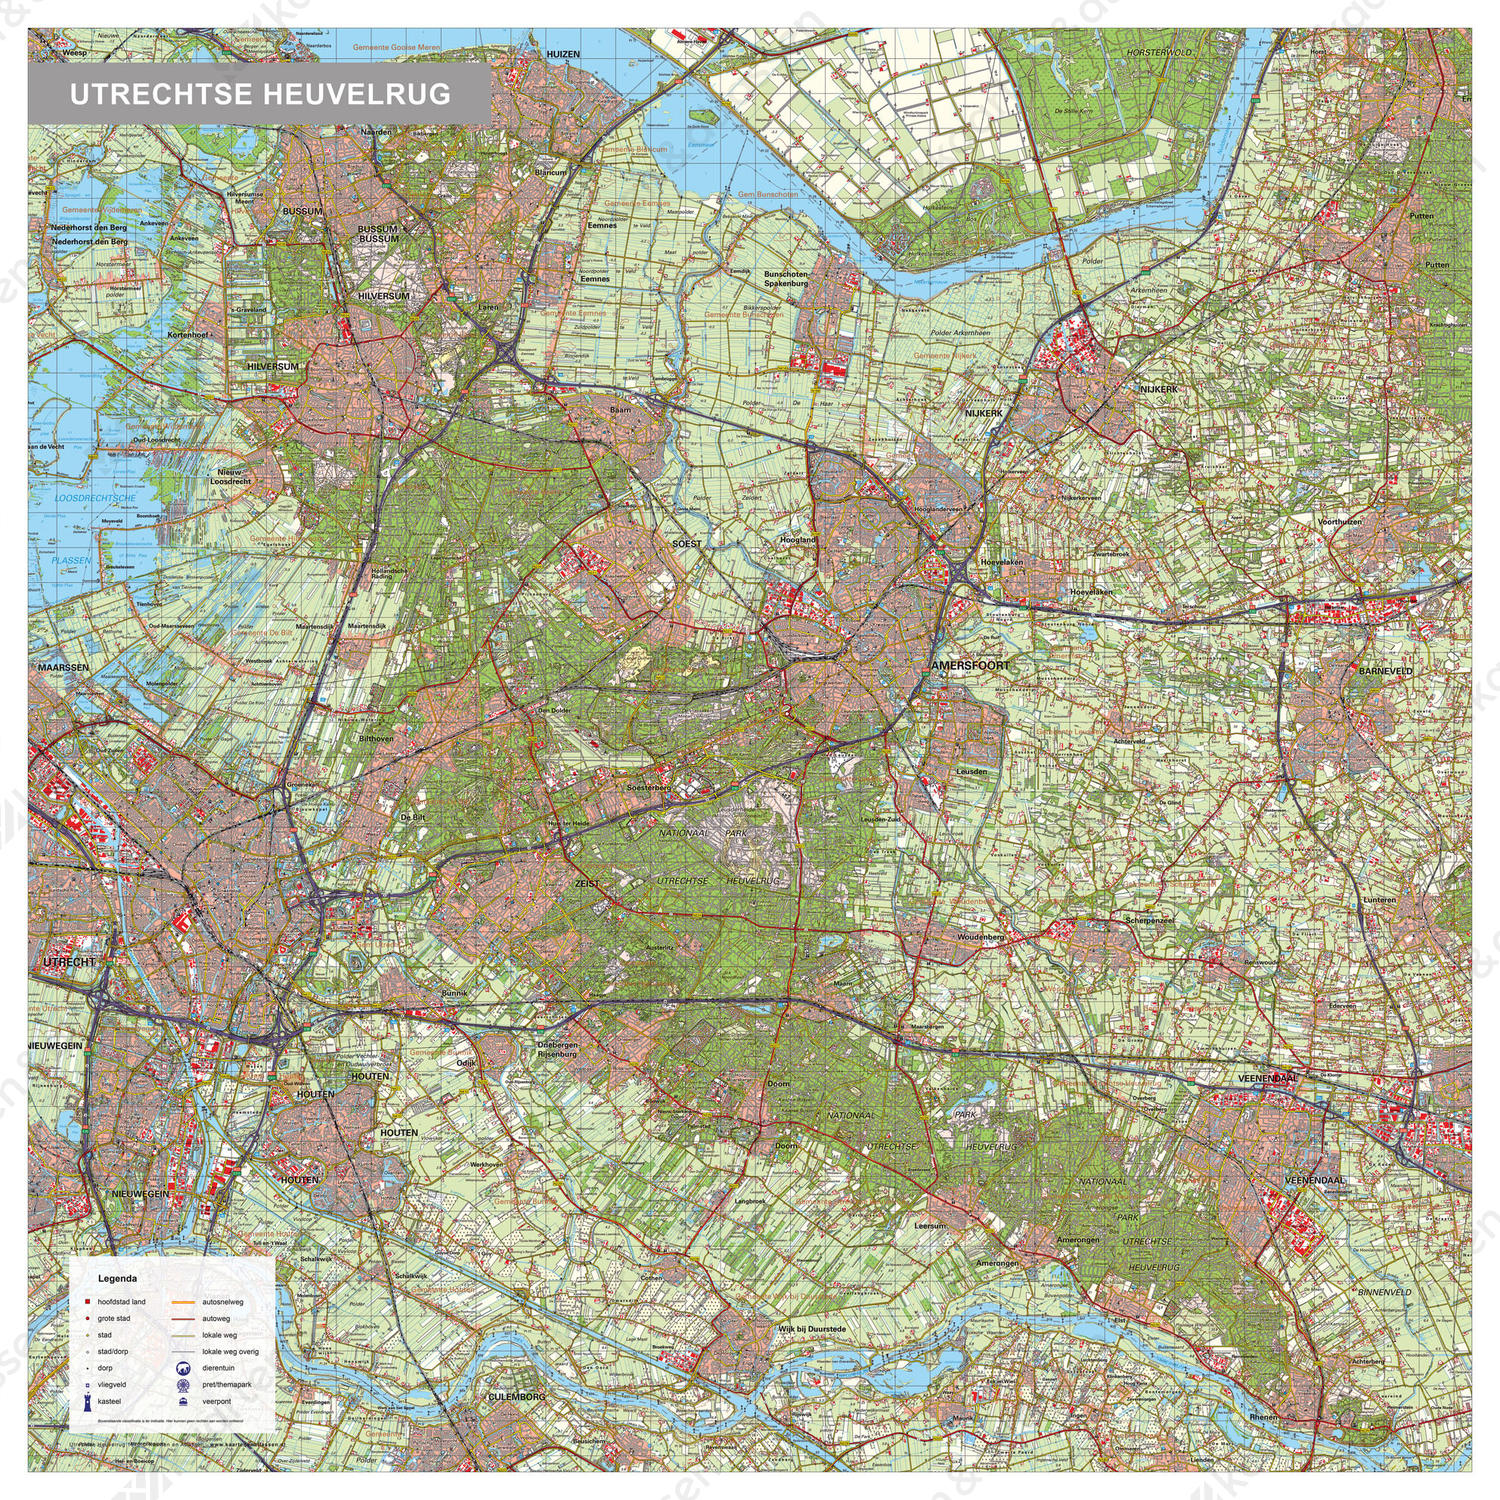 Utrechtse Heuvelrug regiokaart